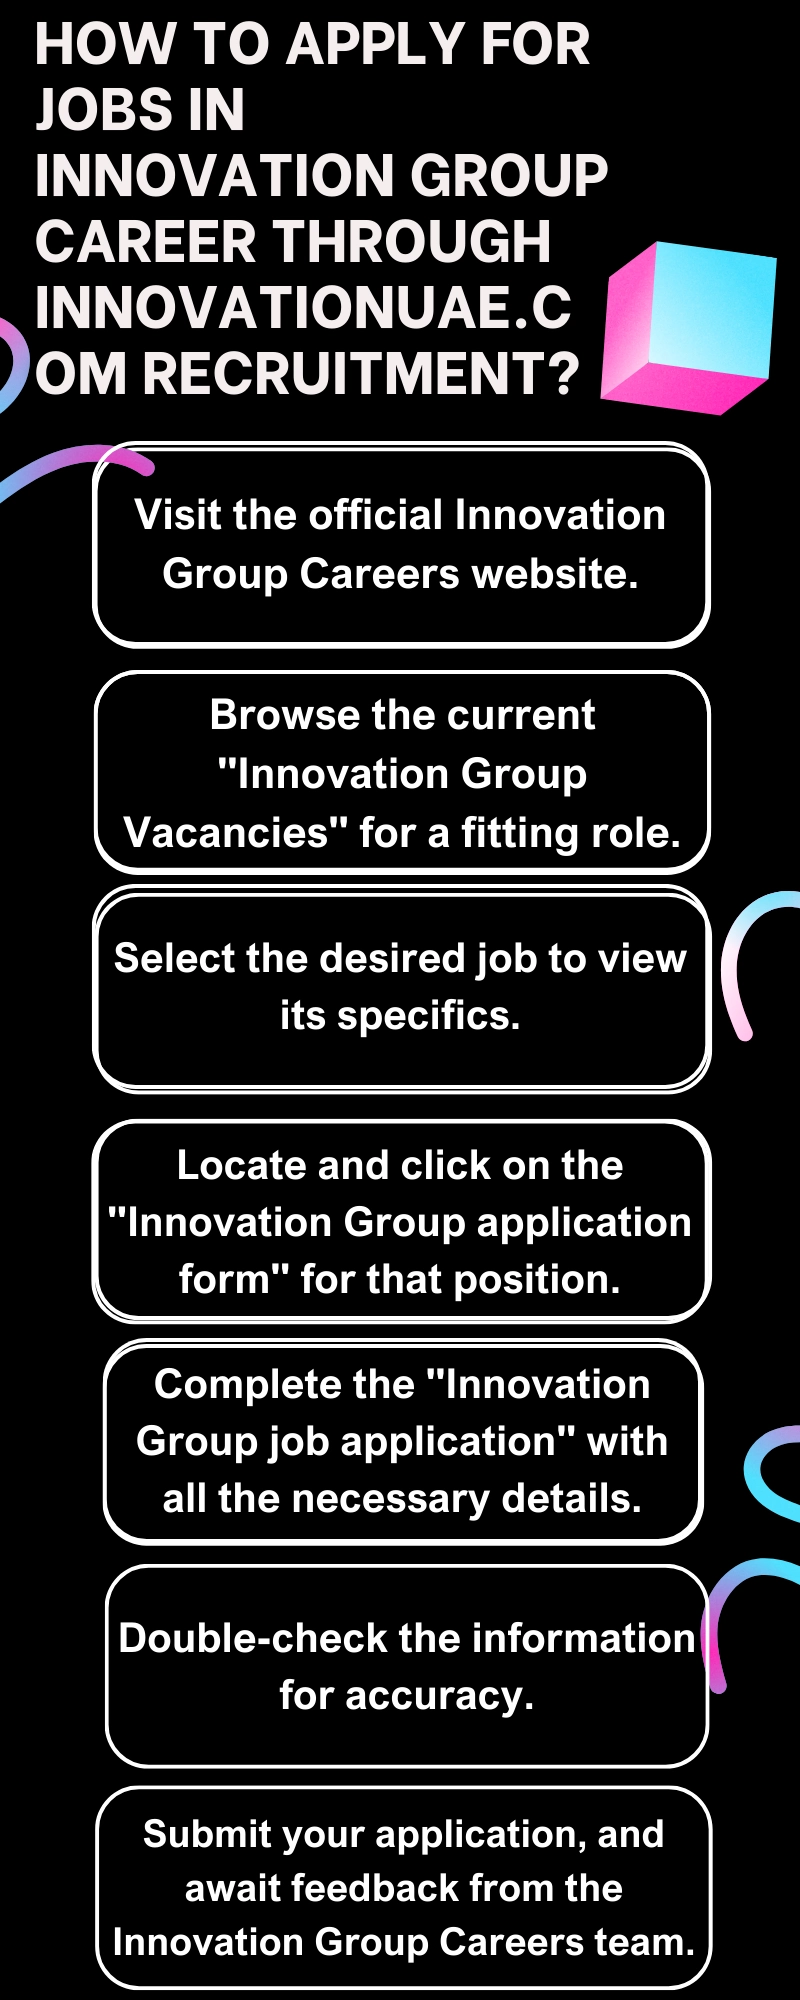 How to Apply for Jobs in Innovation Group Career through innovationuae.com recruitment?